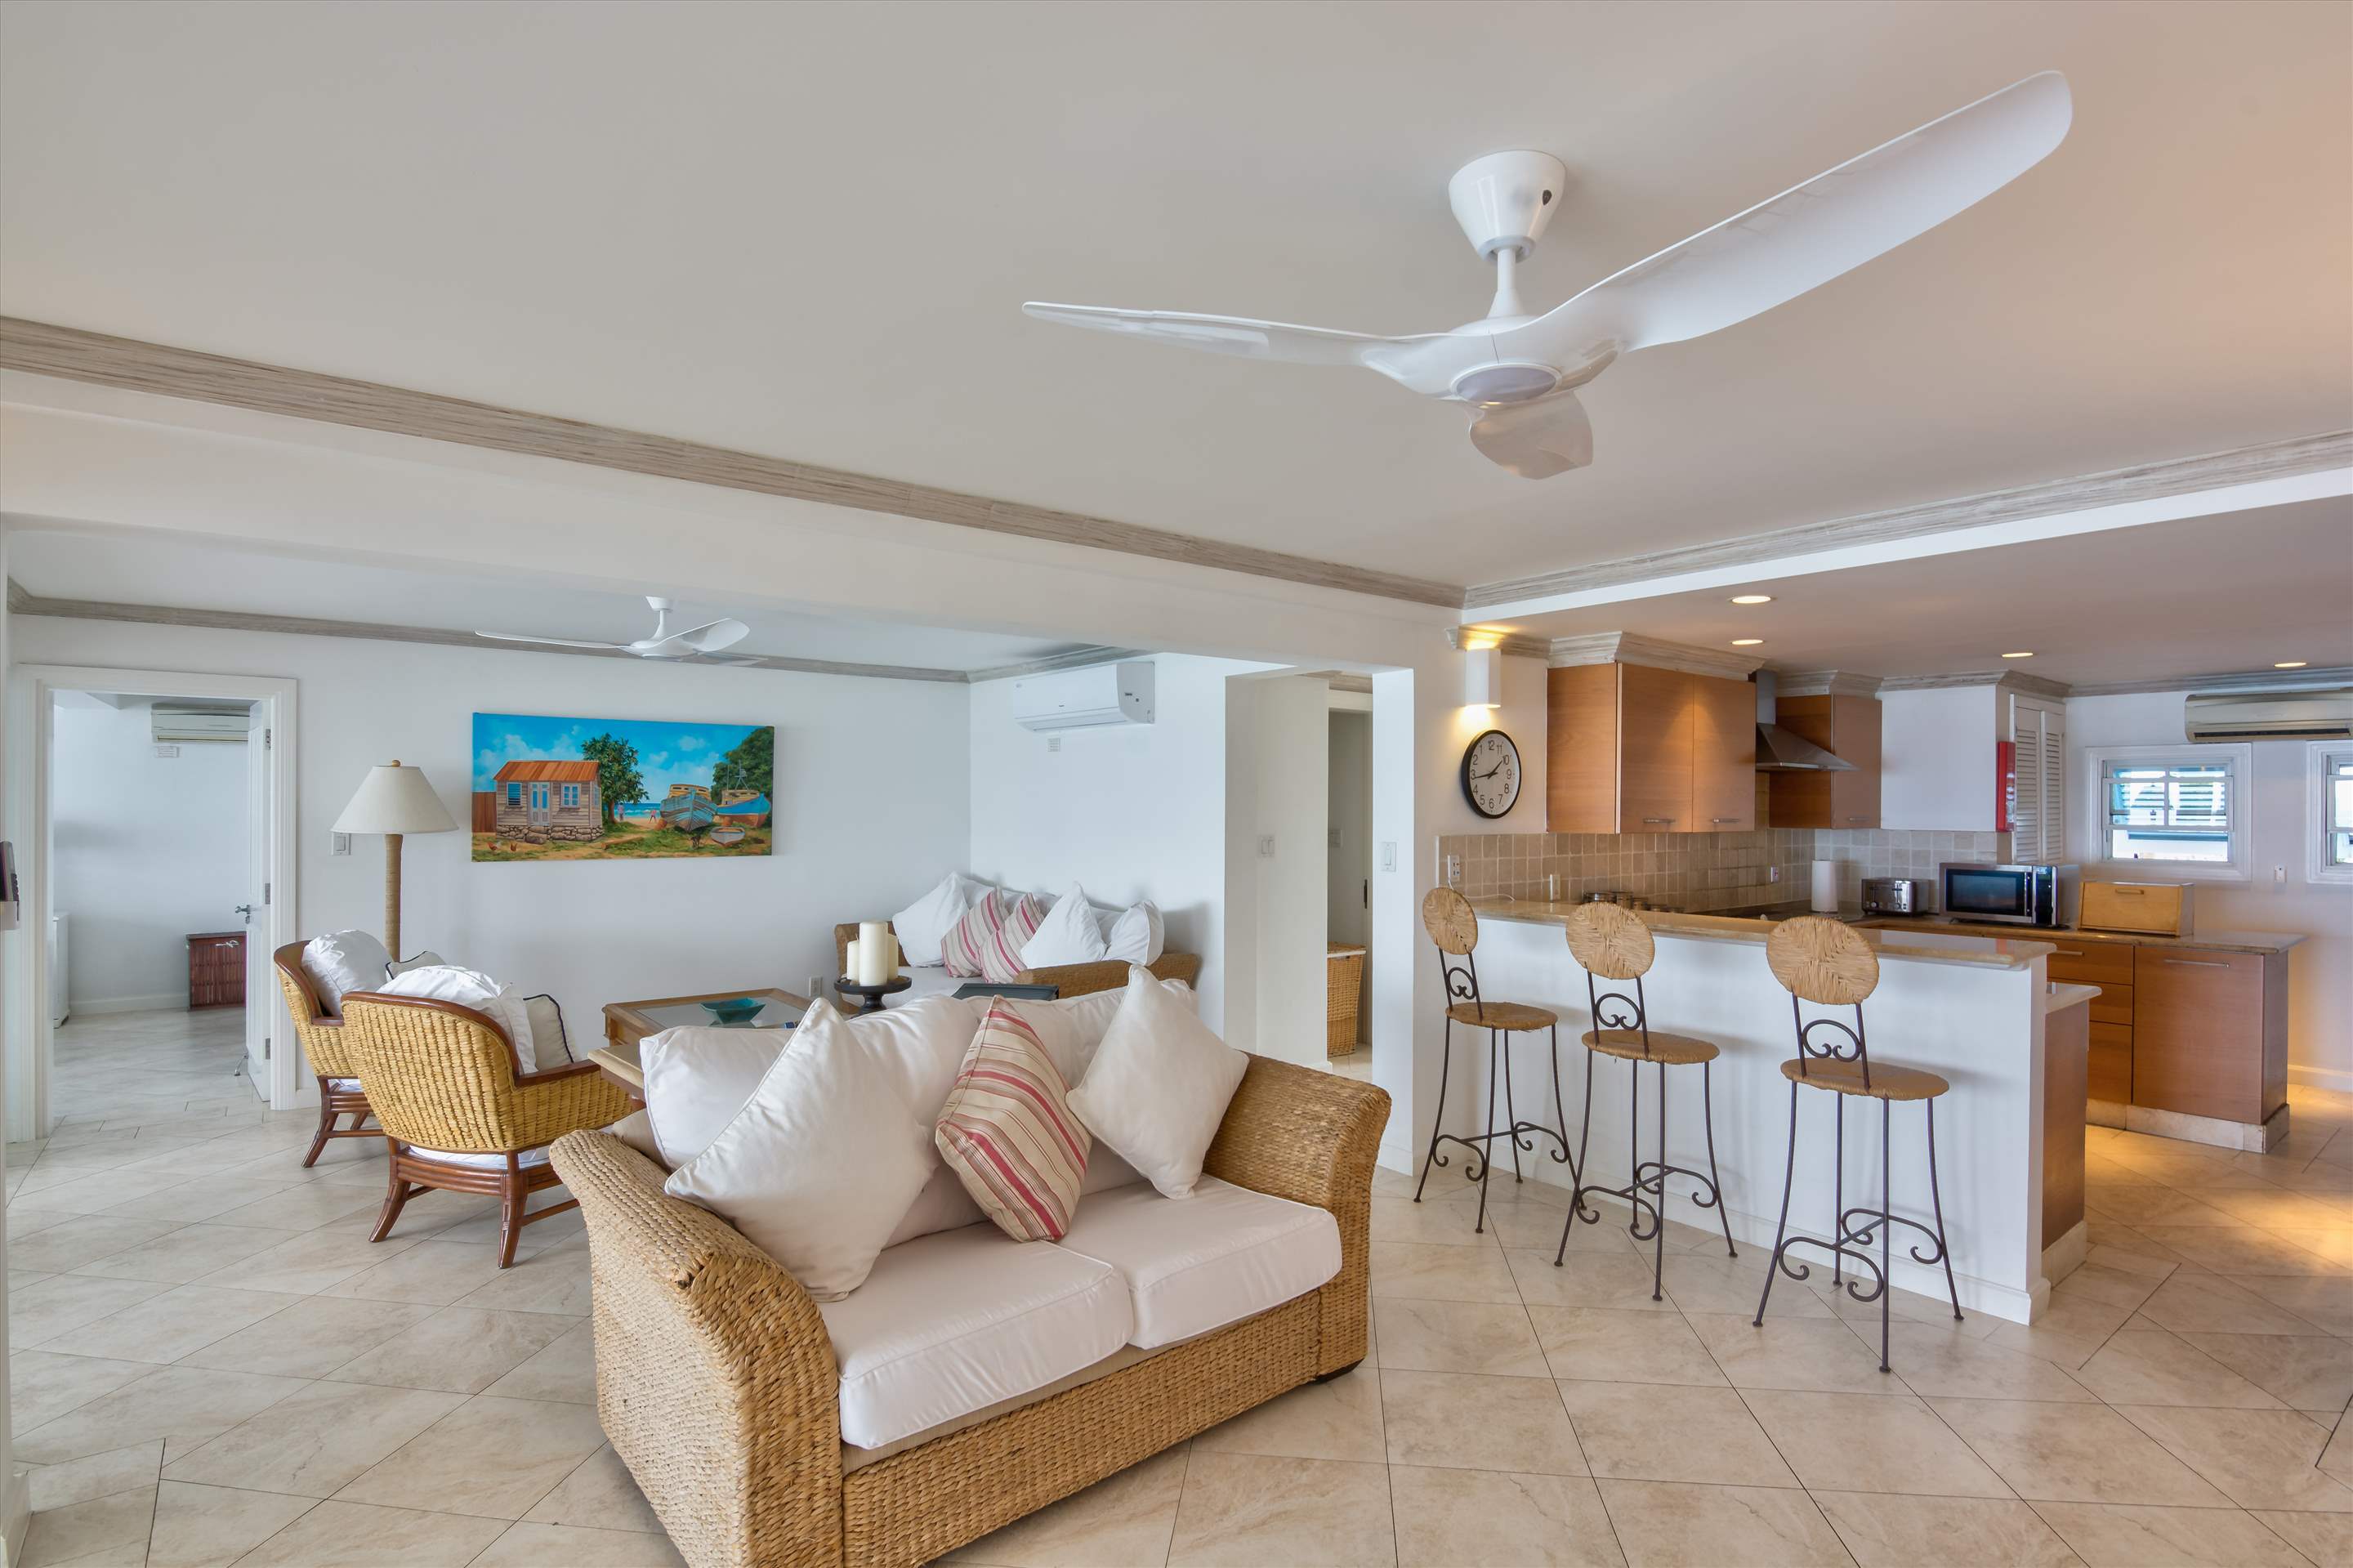 Villas on the Beach 201 , 2 bedroom, 2 bedroom apartment in St. James & West Coast, Barbados Photo #7